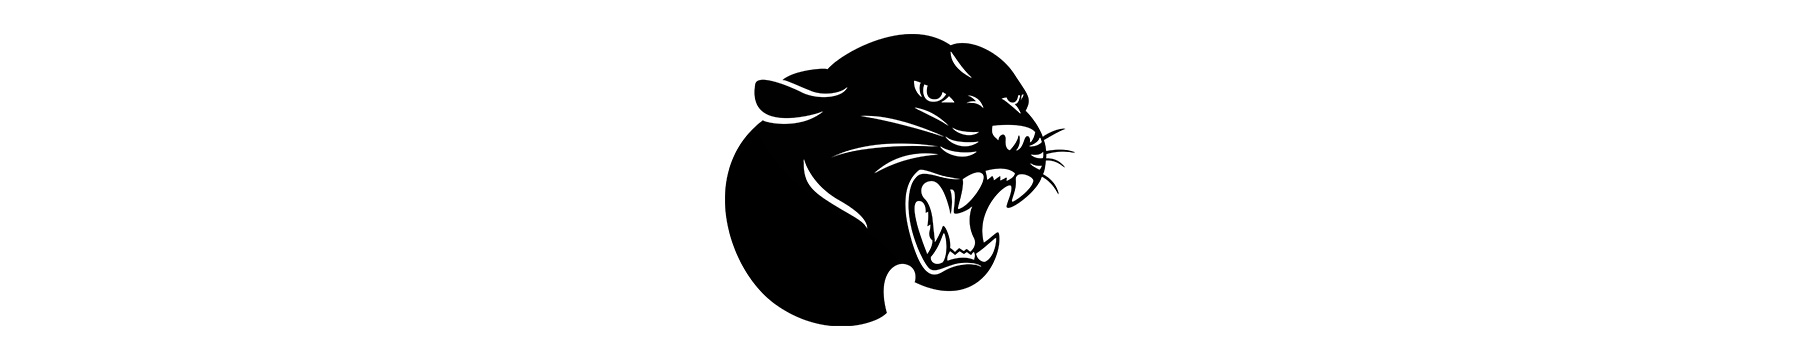 Burlingame HS Panthers